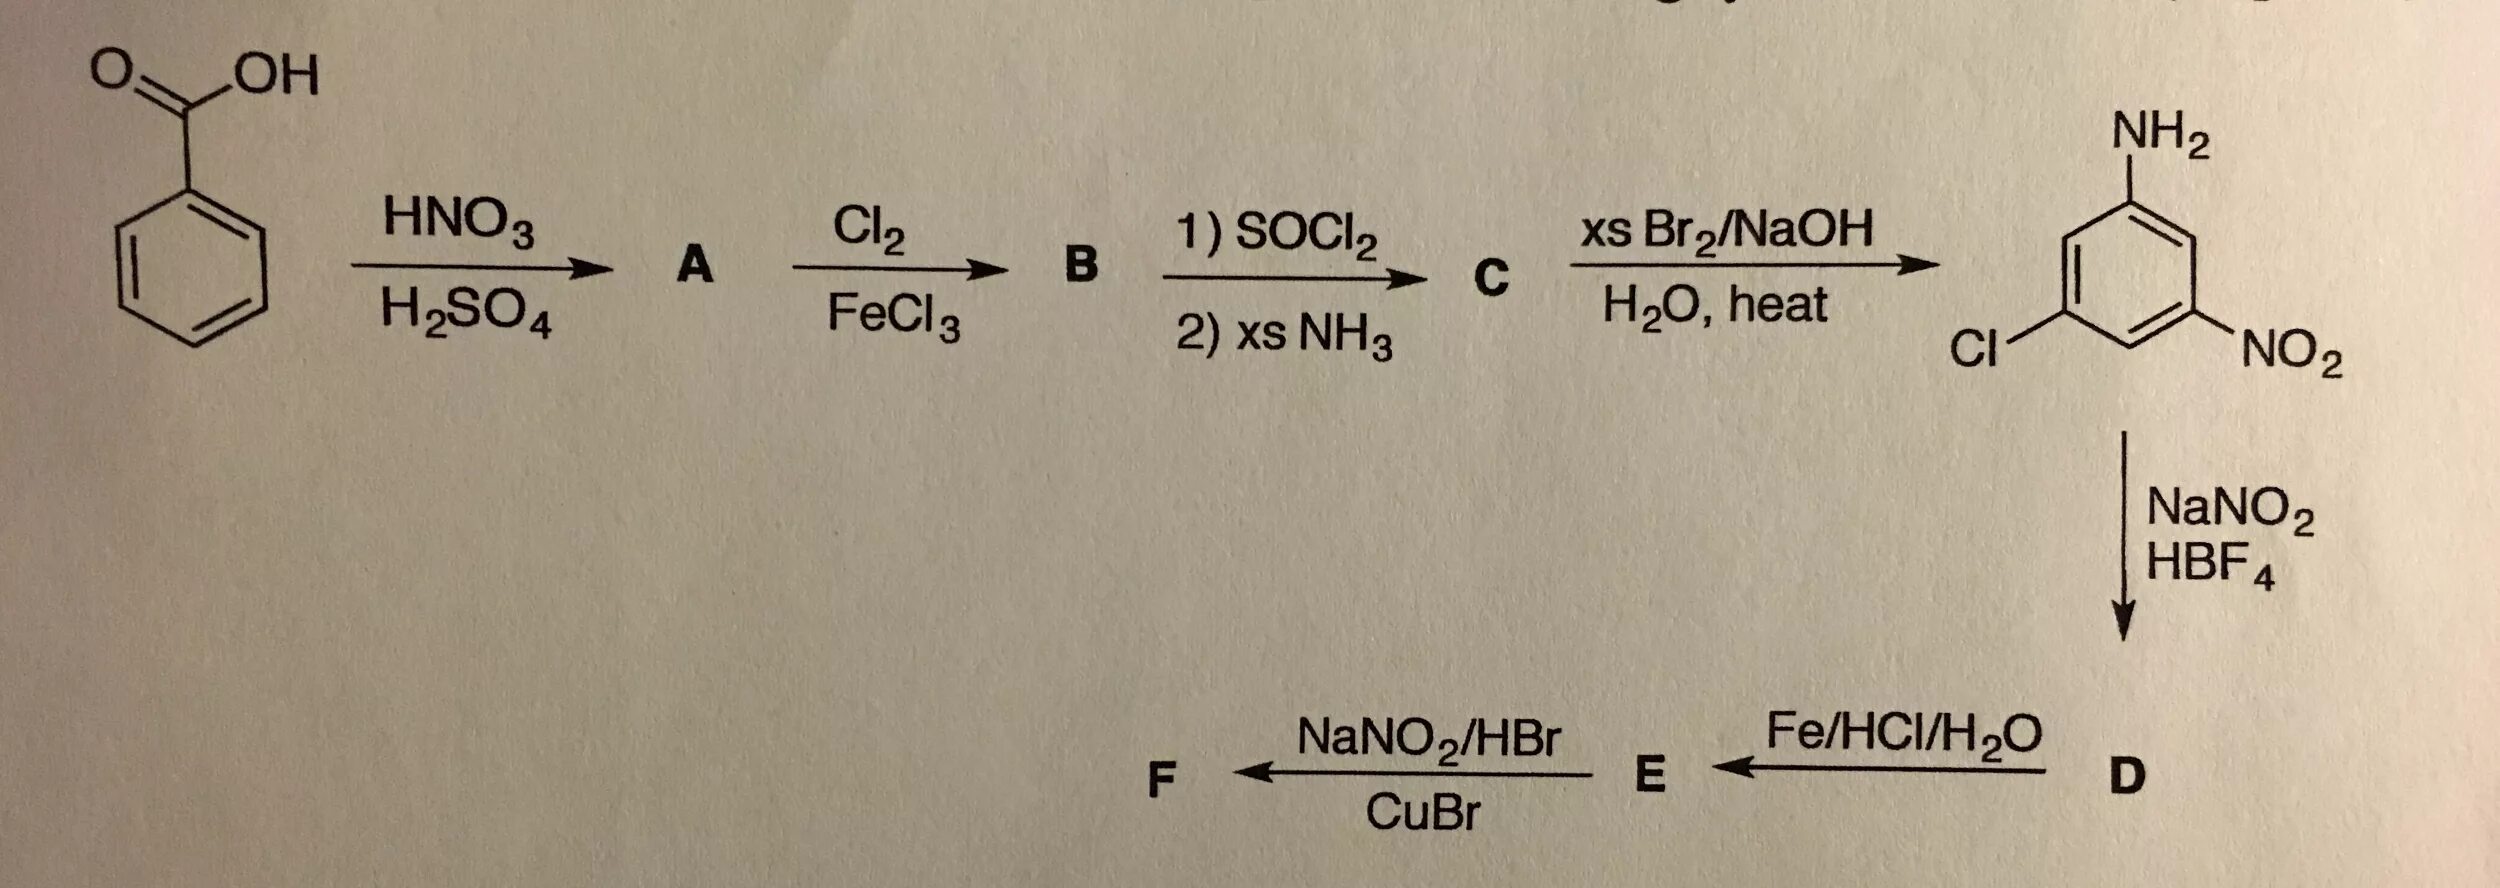 Ch3nh3br + hno2. Бензол hno2. Метилбензол + 2cl2 al2o3. Hno3 h2so4. Продукты реакции naoh hno3